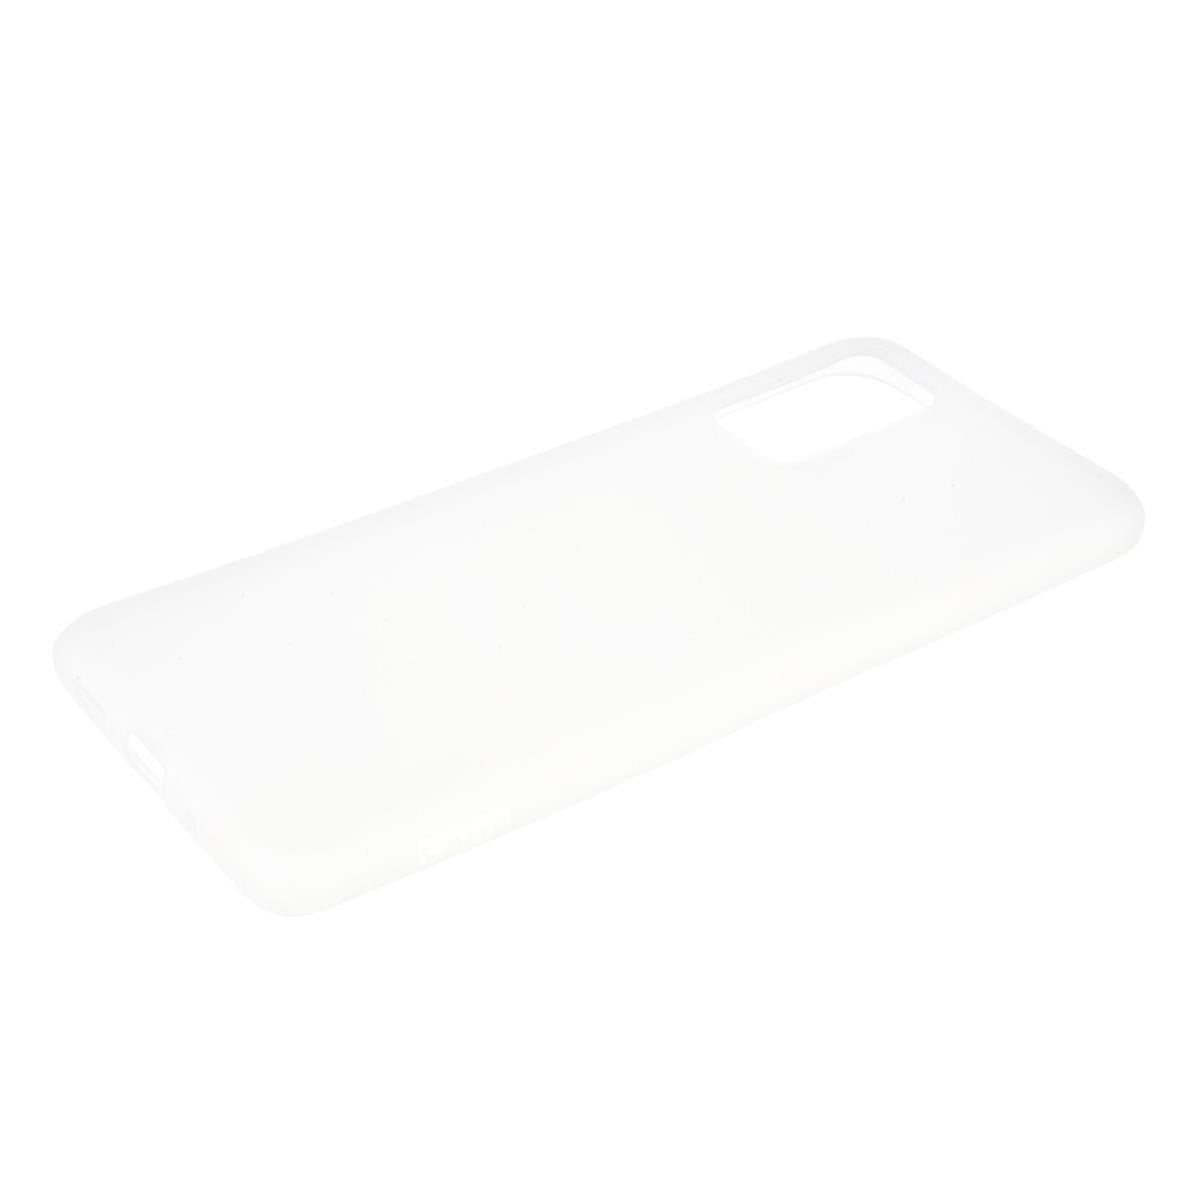 Hülle für Samsung Galaxy A41 Handyhülle Silikon Case Cover Bumper Matt Weiß